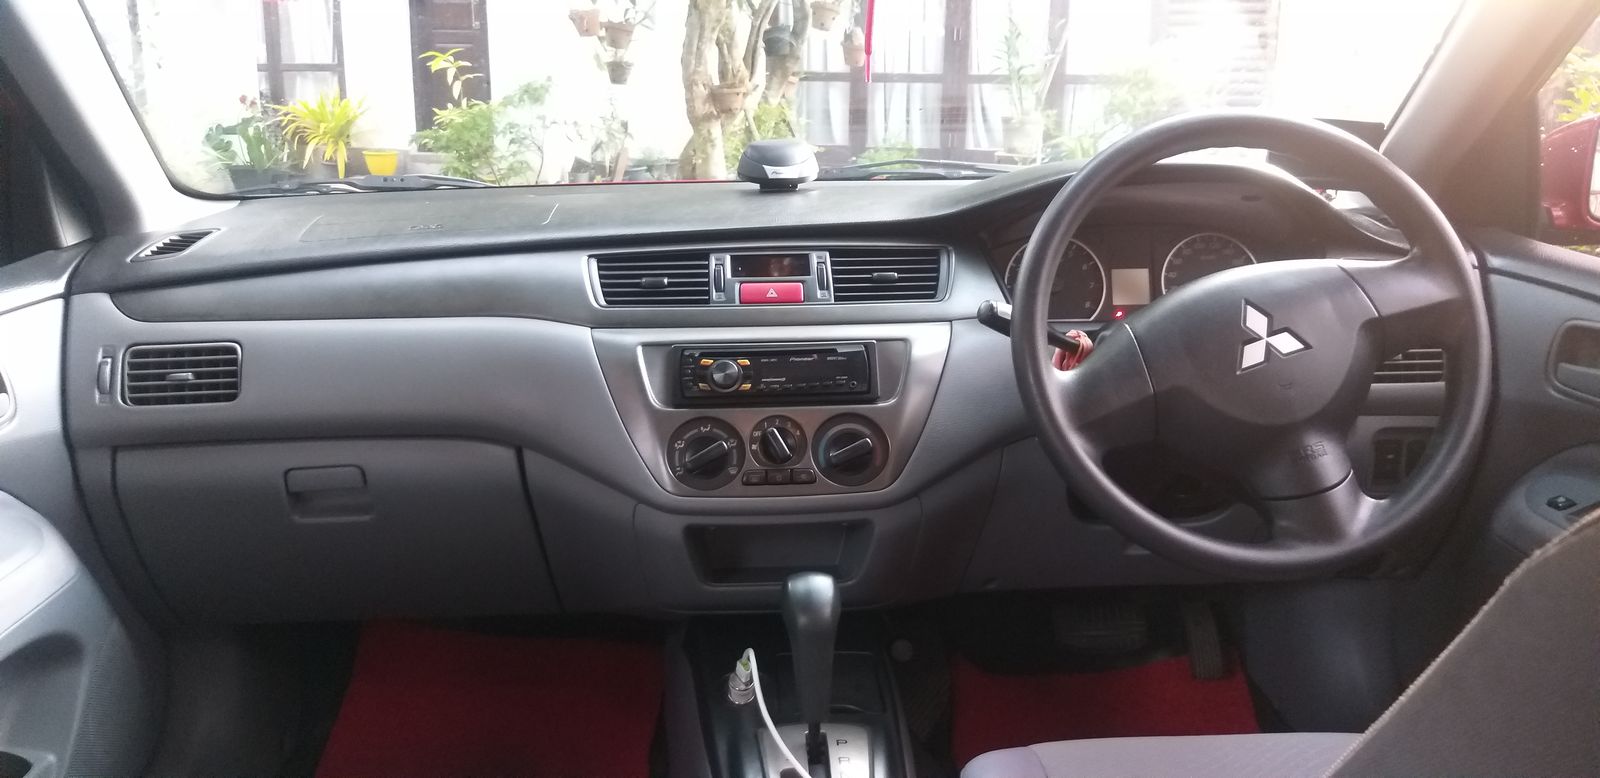 Mitsubishi Lancer front interior + dashboard